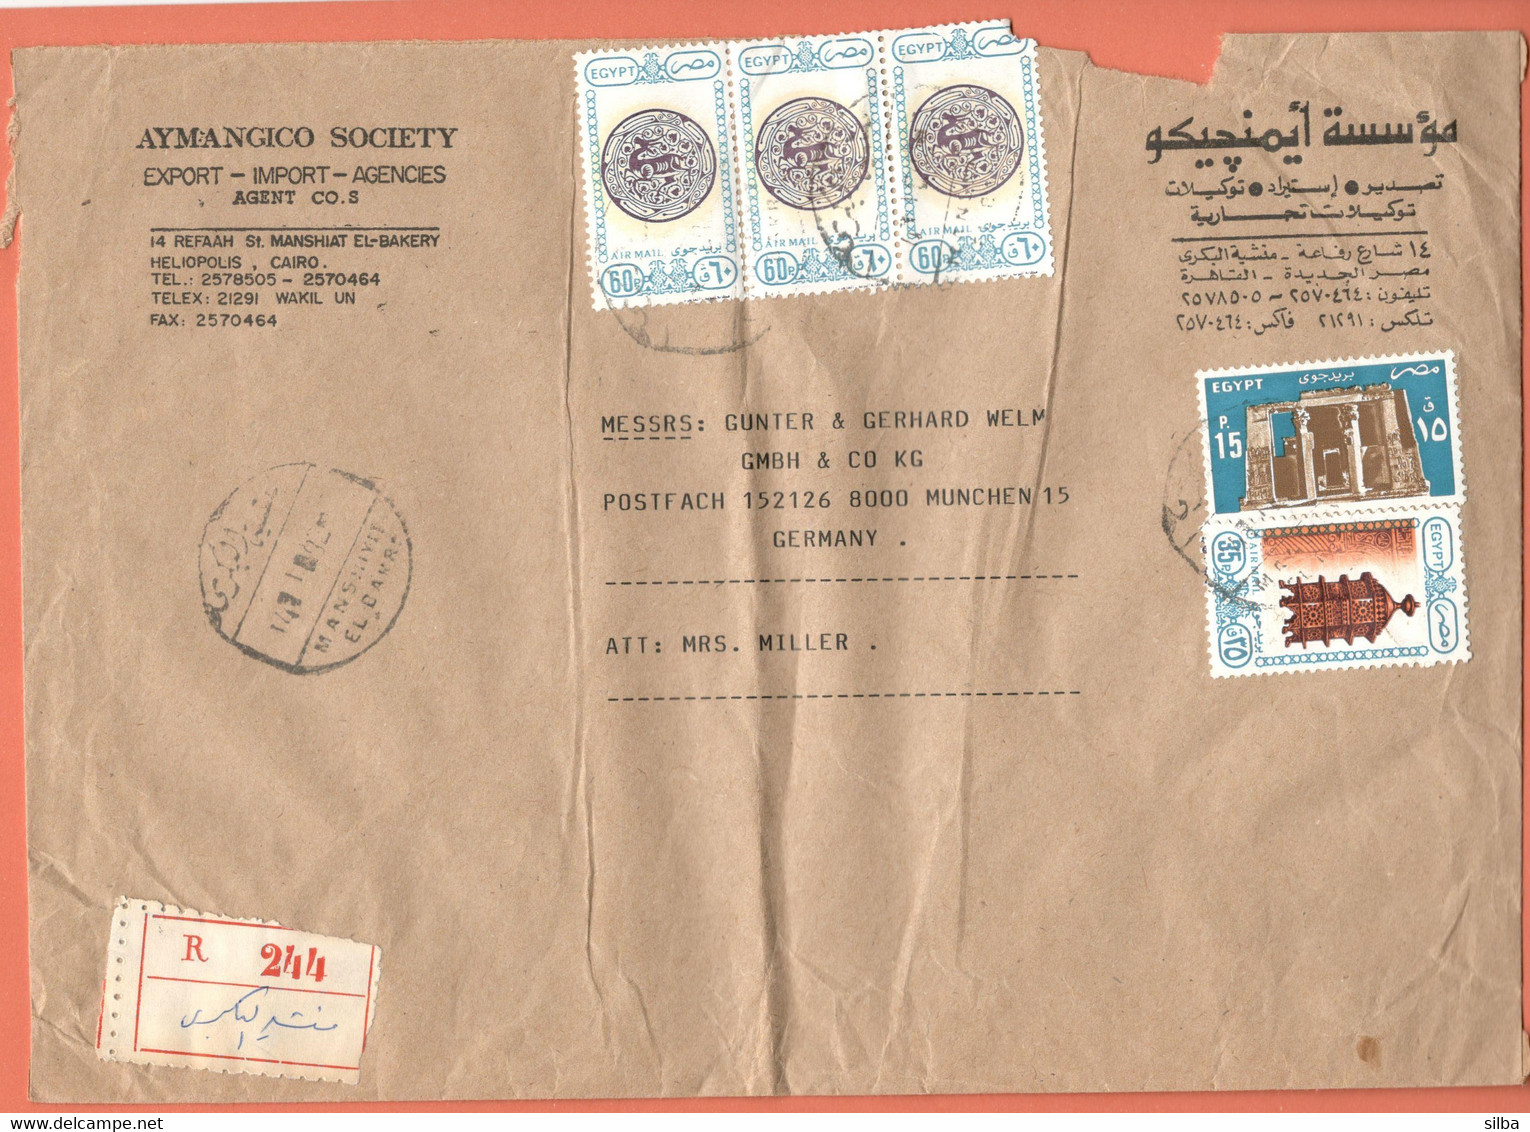 Egypt / Airmail - Art And Mosques, Lantern 35 P, Dish With Gazelle Motif - 60 P, 1989, Edfu Temple, 15 P, 1985 - Briefe U. Dokumente